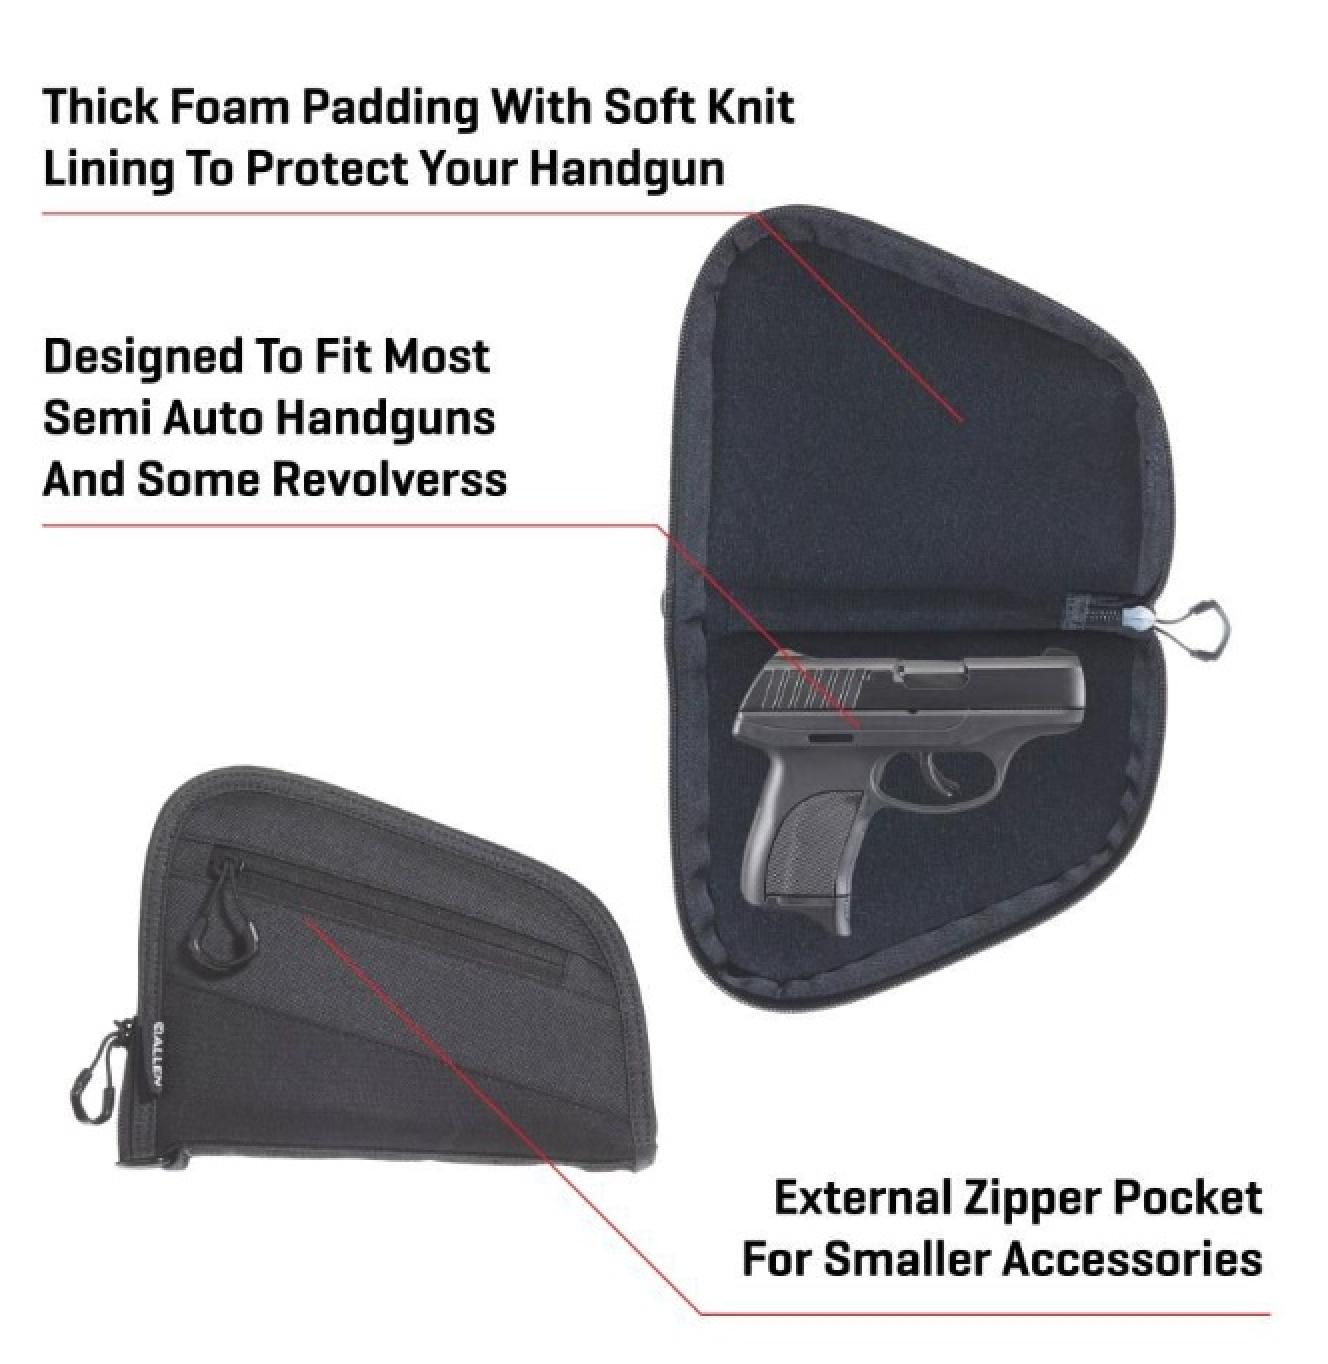 Allen 7" Auto-Fit 2.0 Compact Handgun Case